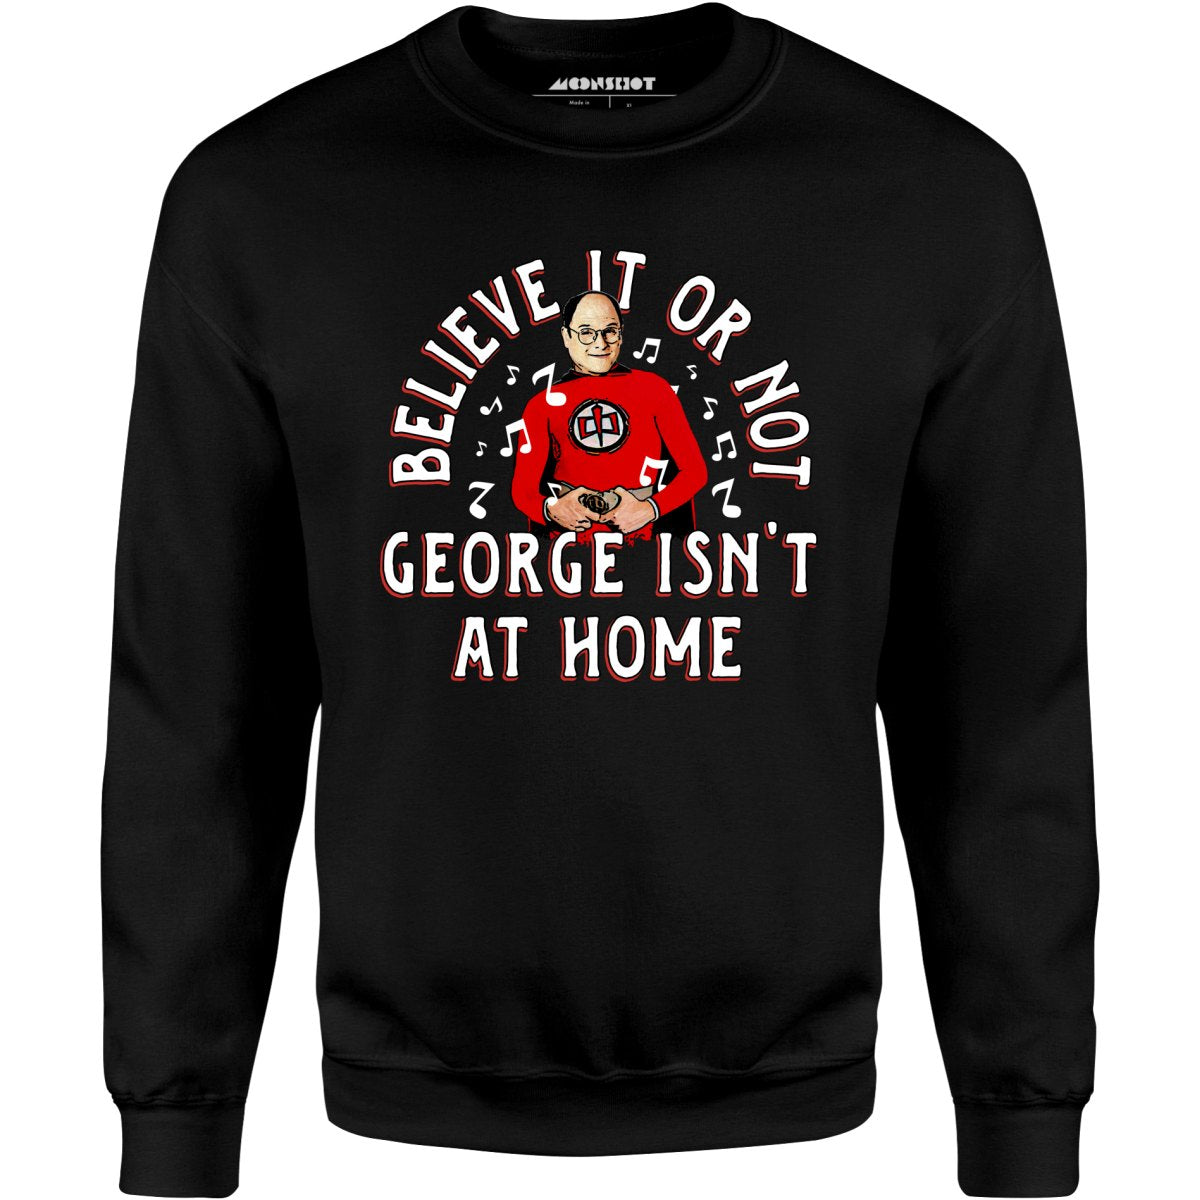 Believe It Or Not George Isn't at Home - Unisex Sweatshirt